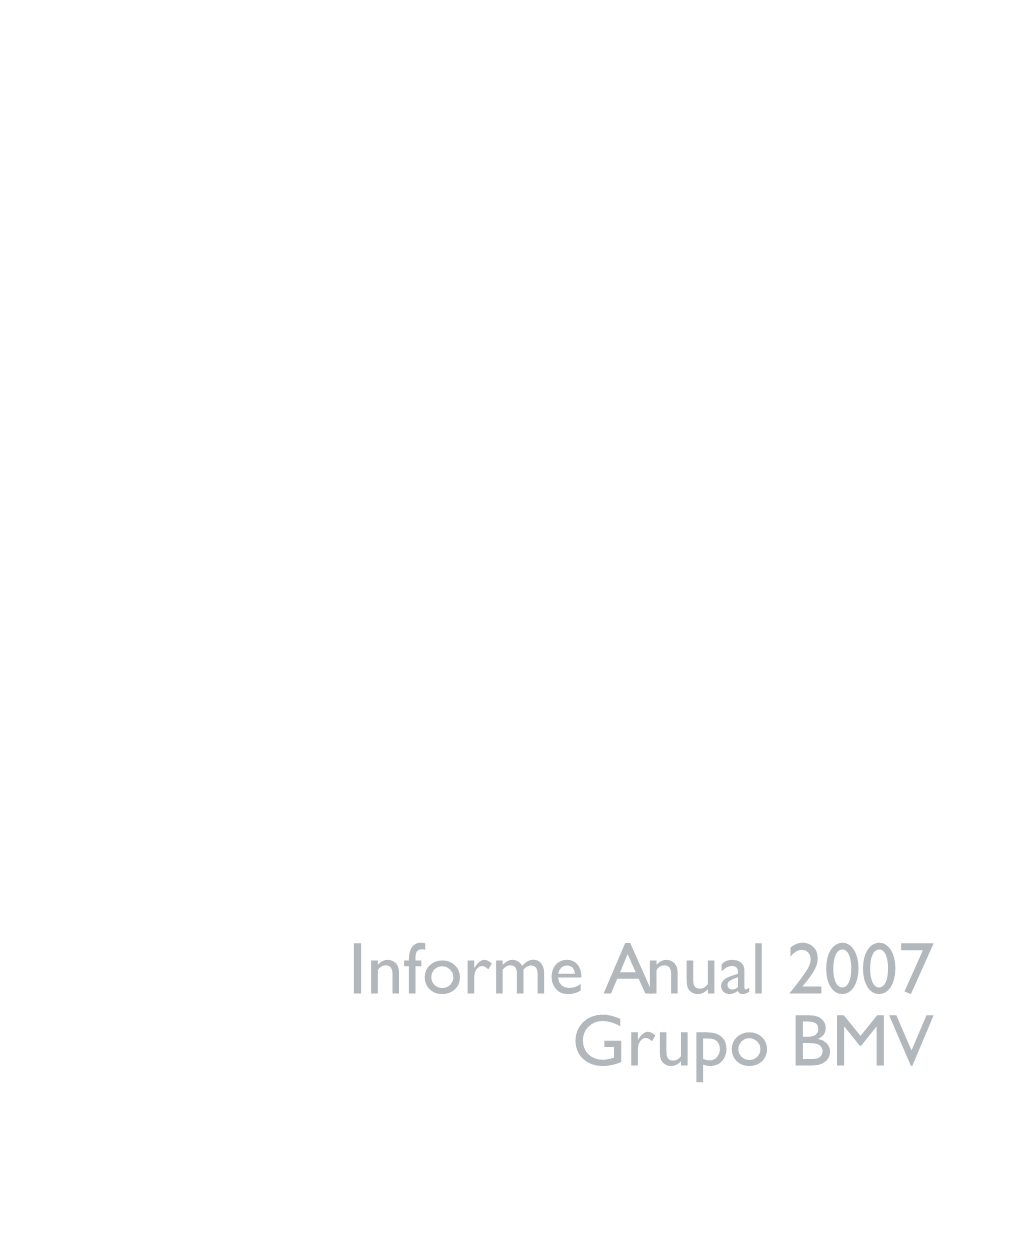 Informe Anual 2007 Grupo BMV